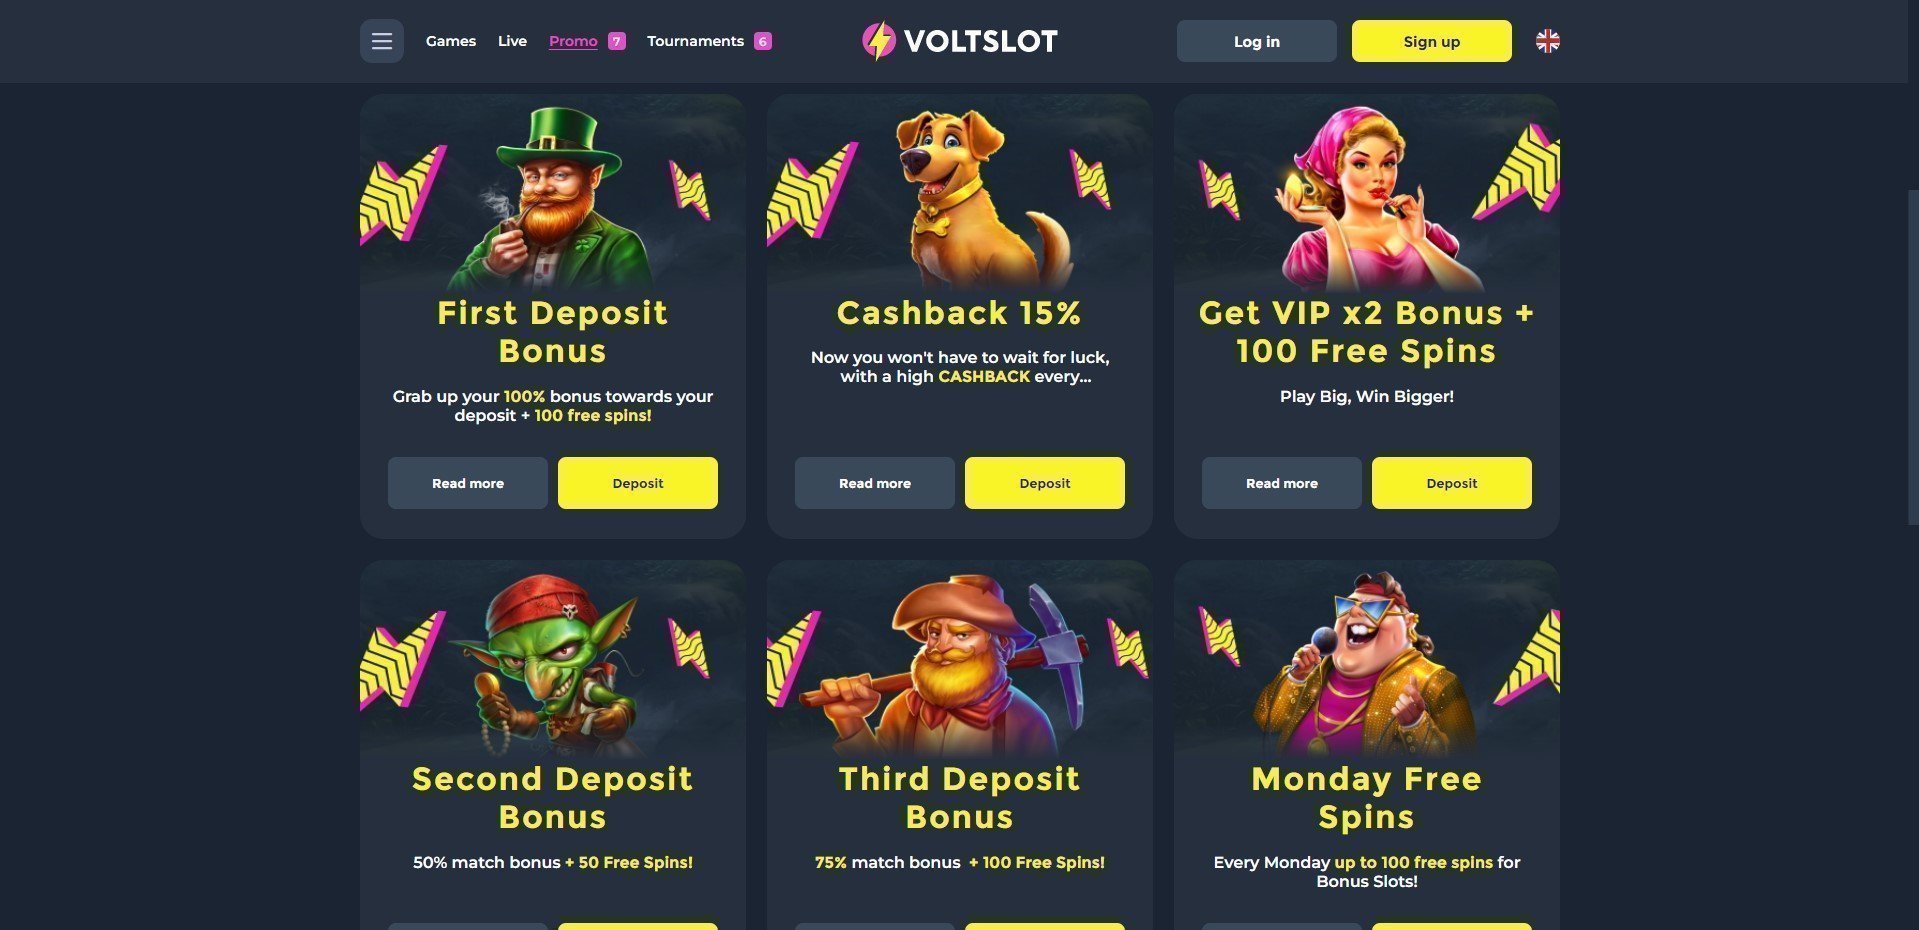 Voltslot Casino Promotions